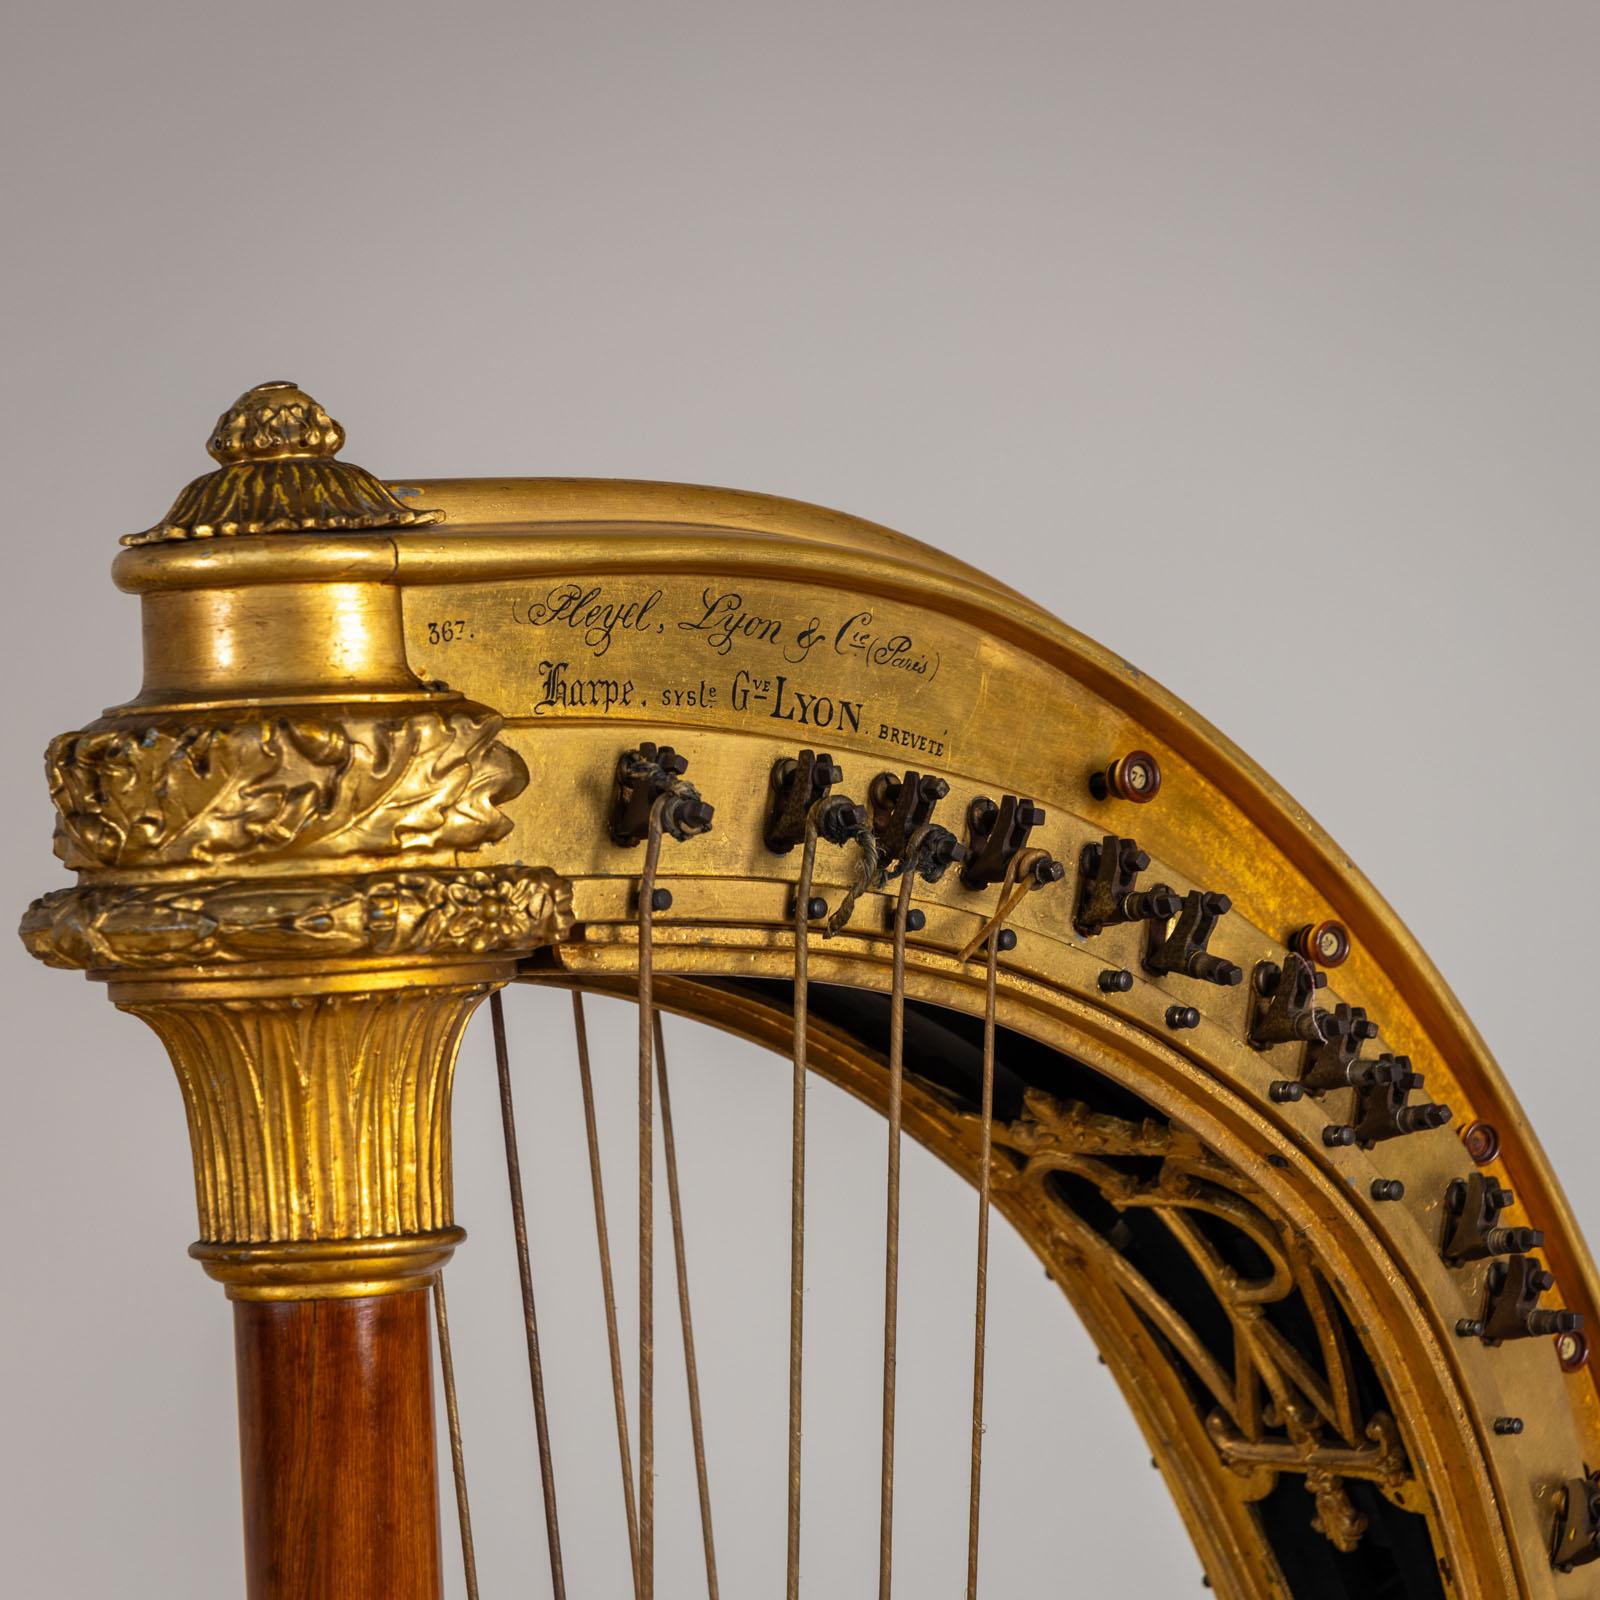 Early 20th Century Chromatic Double Harp, Pleyel, Lyon & Cie, Paris, circa 1900 For Sale